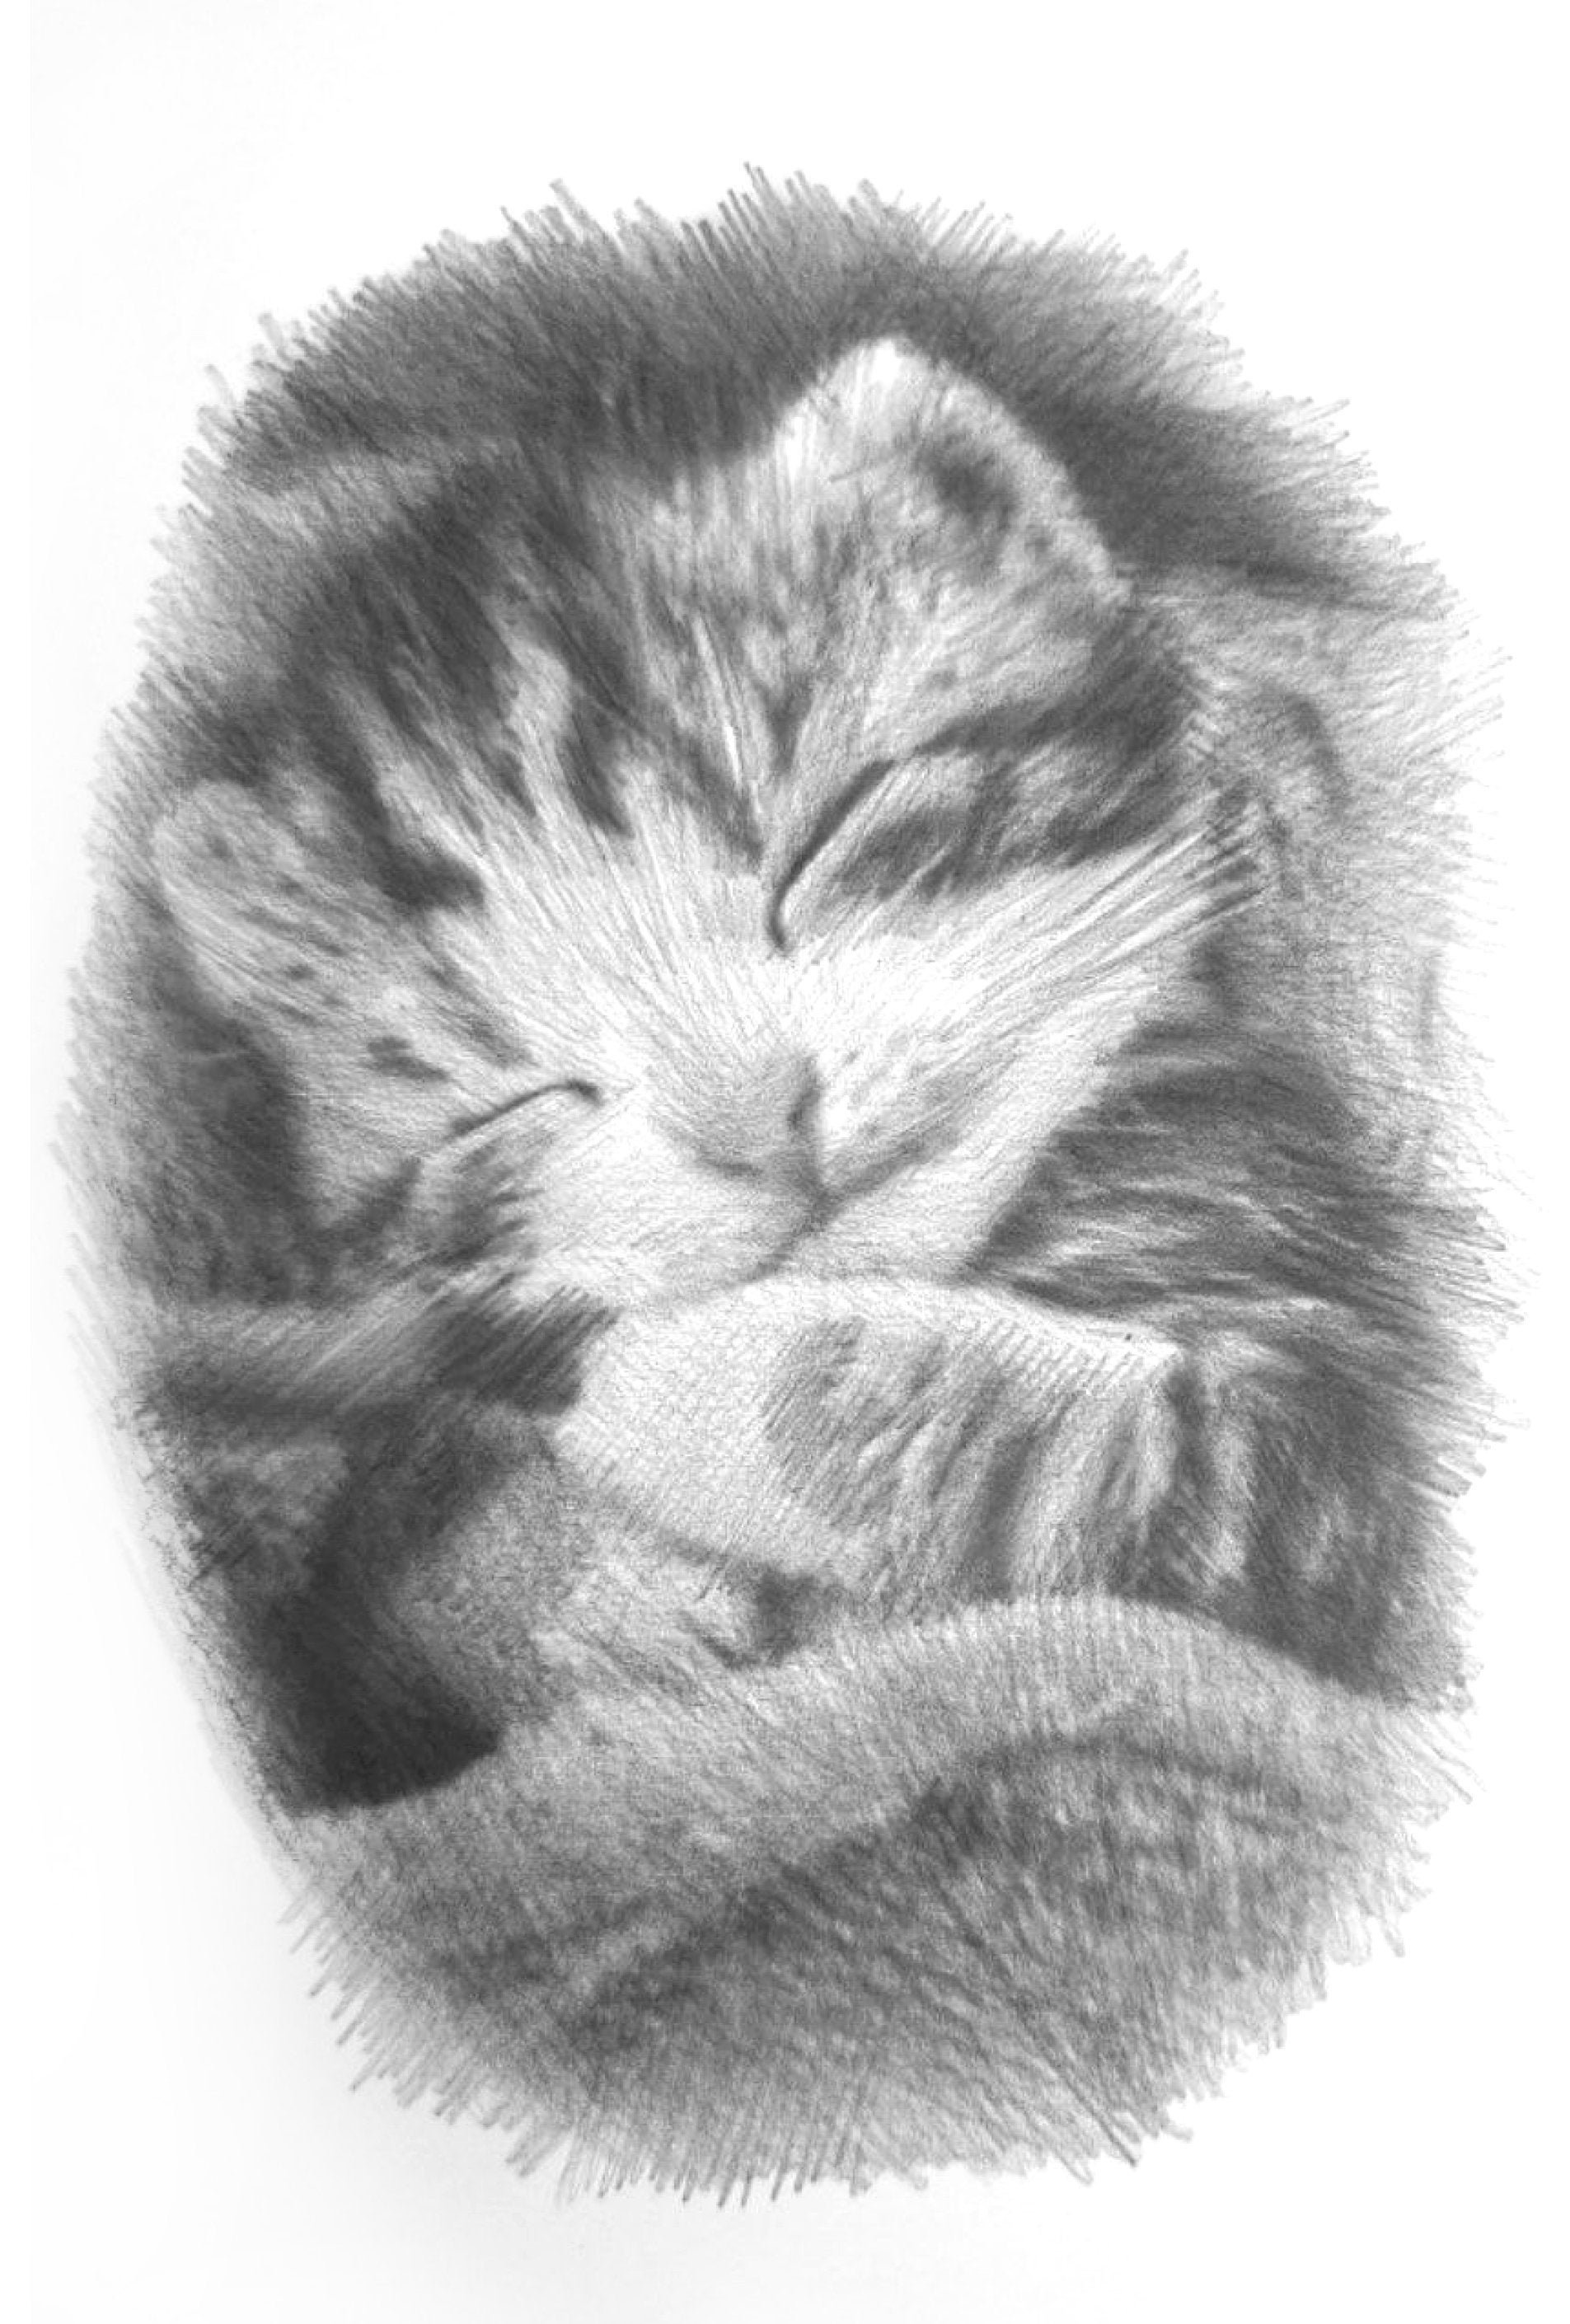 19170 Pencil Drawing Cat Images Stock Photos  Vectors  Shutterstock